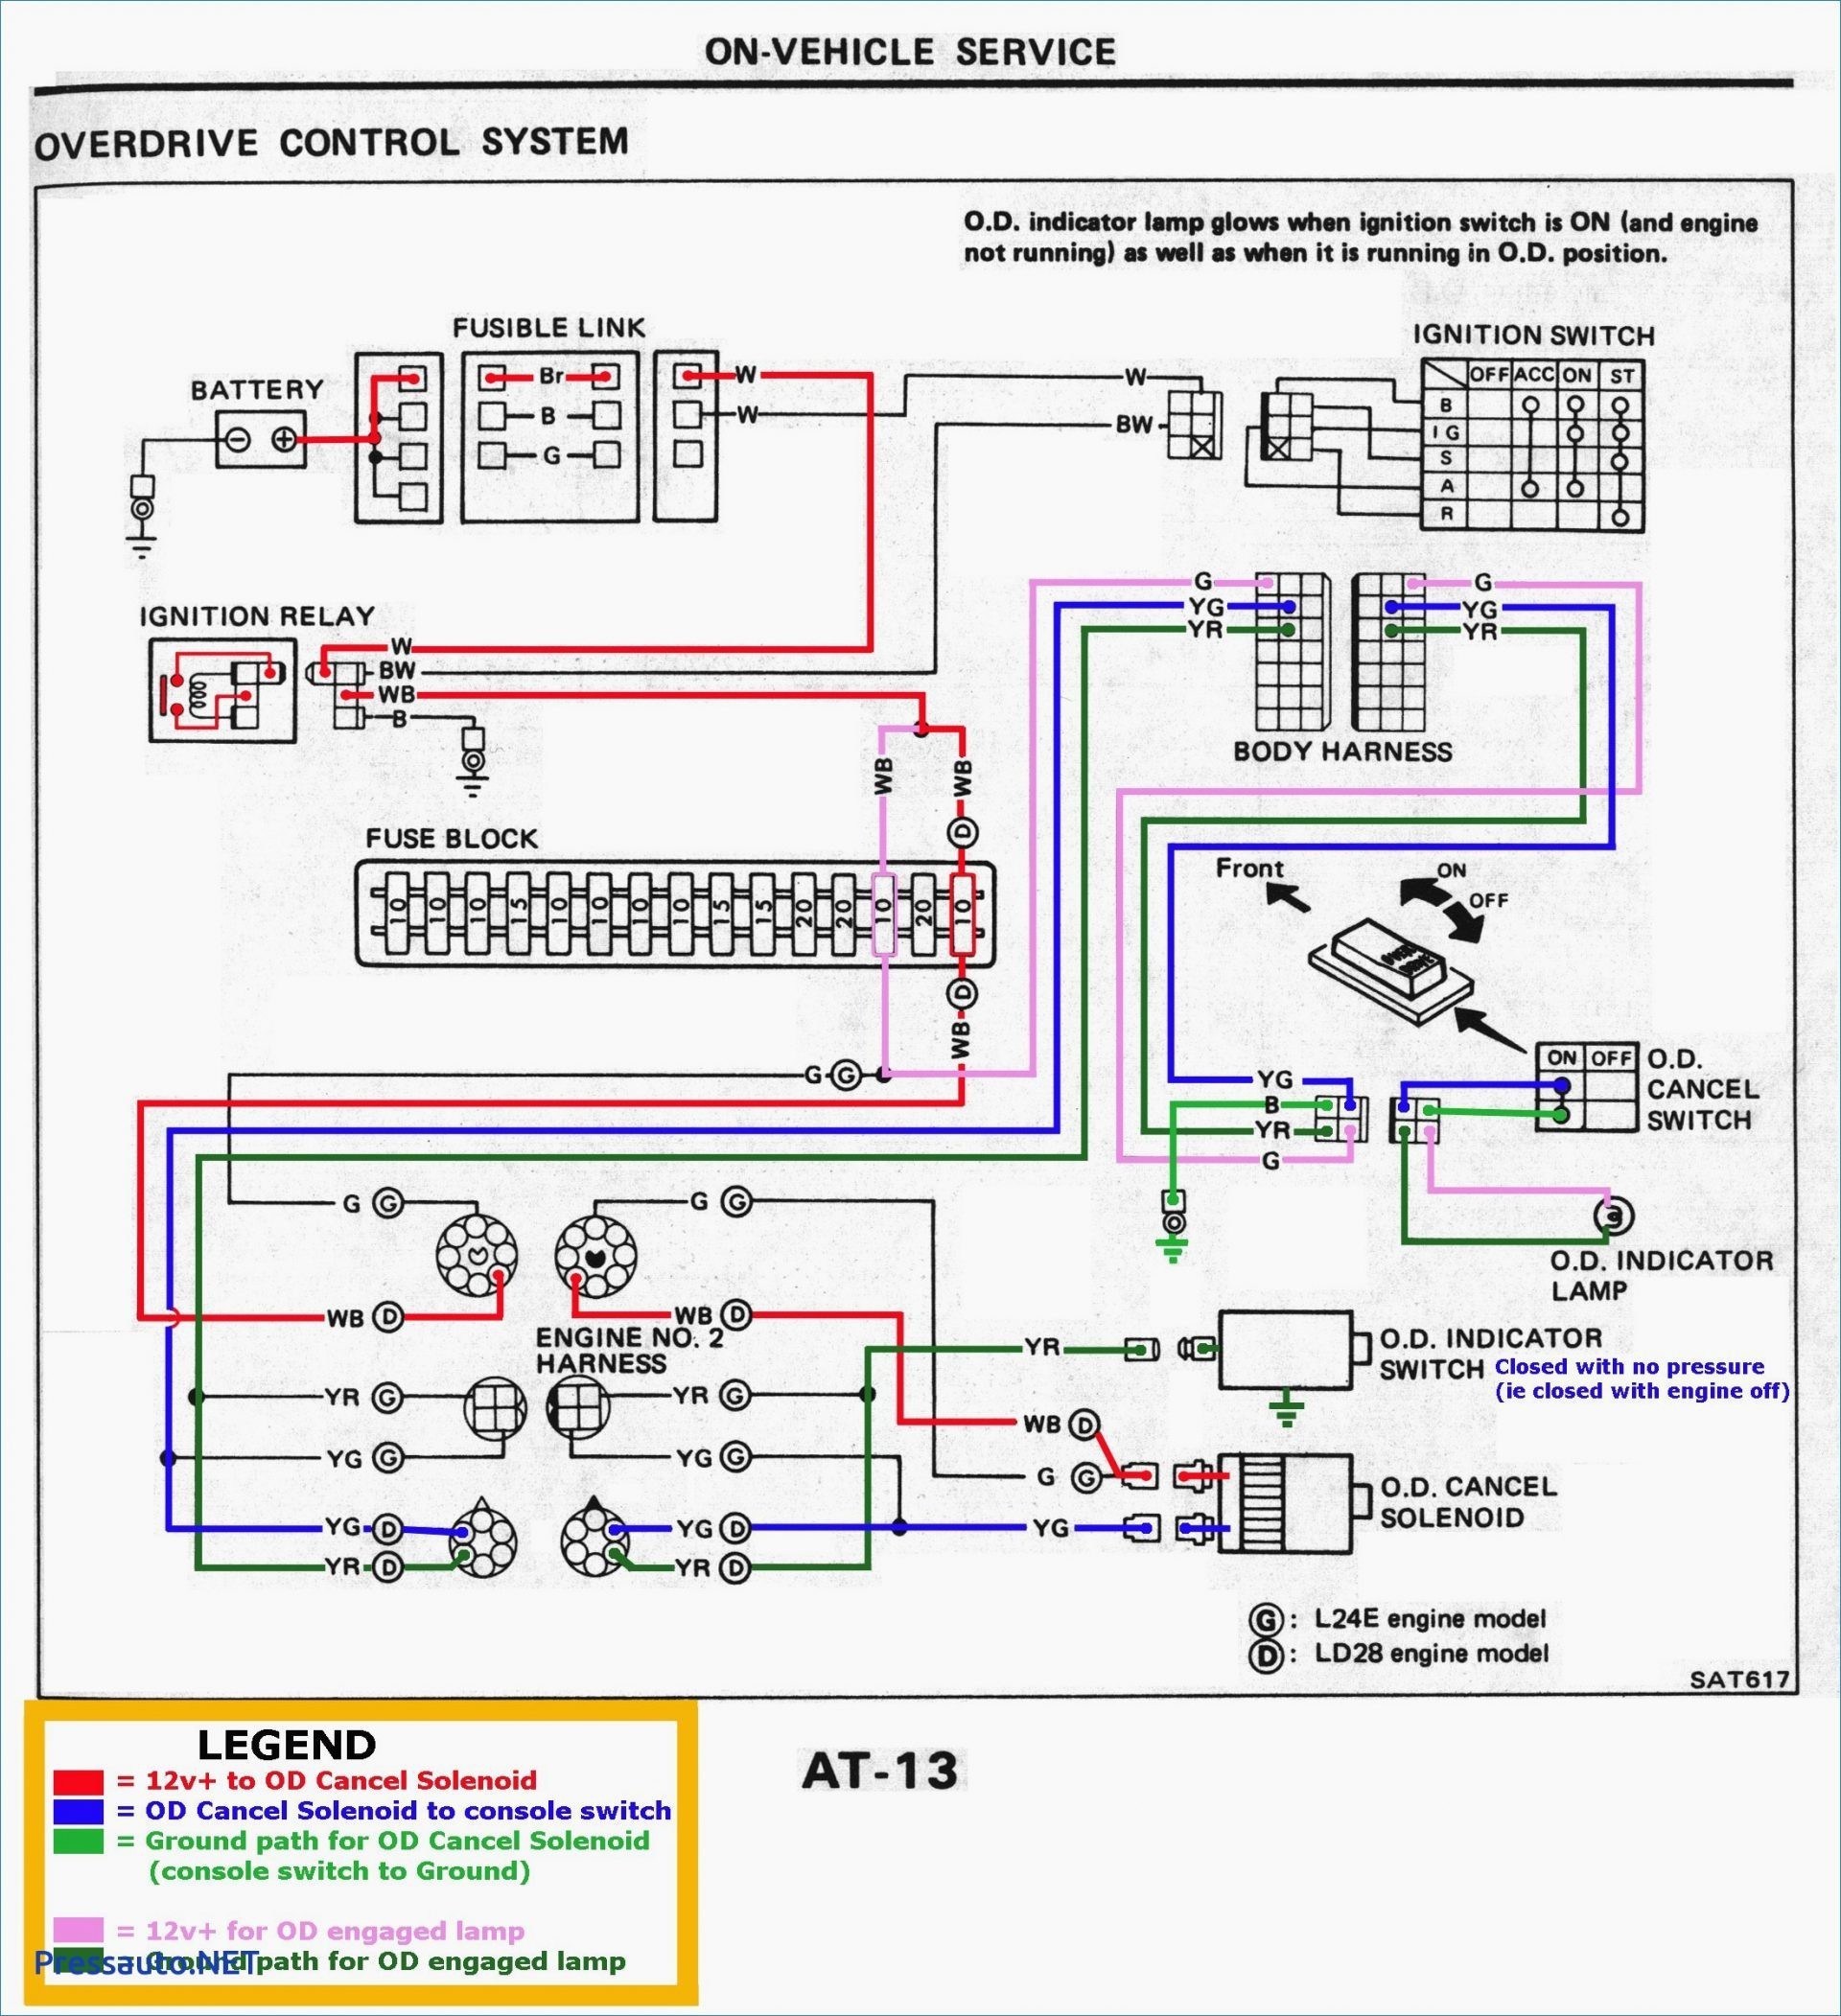 Chevy Silverado Trailer Wiring Diagram New 2002 Chevy Silverado Trailer Wiring Diagram Sample